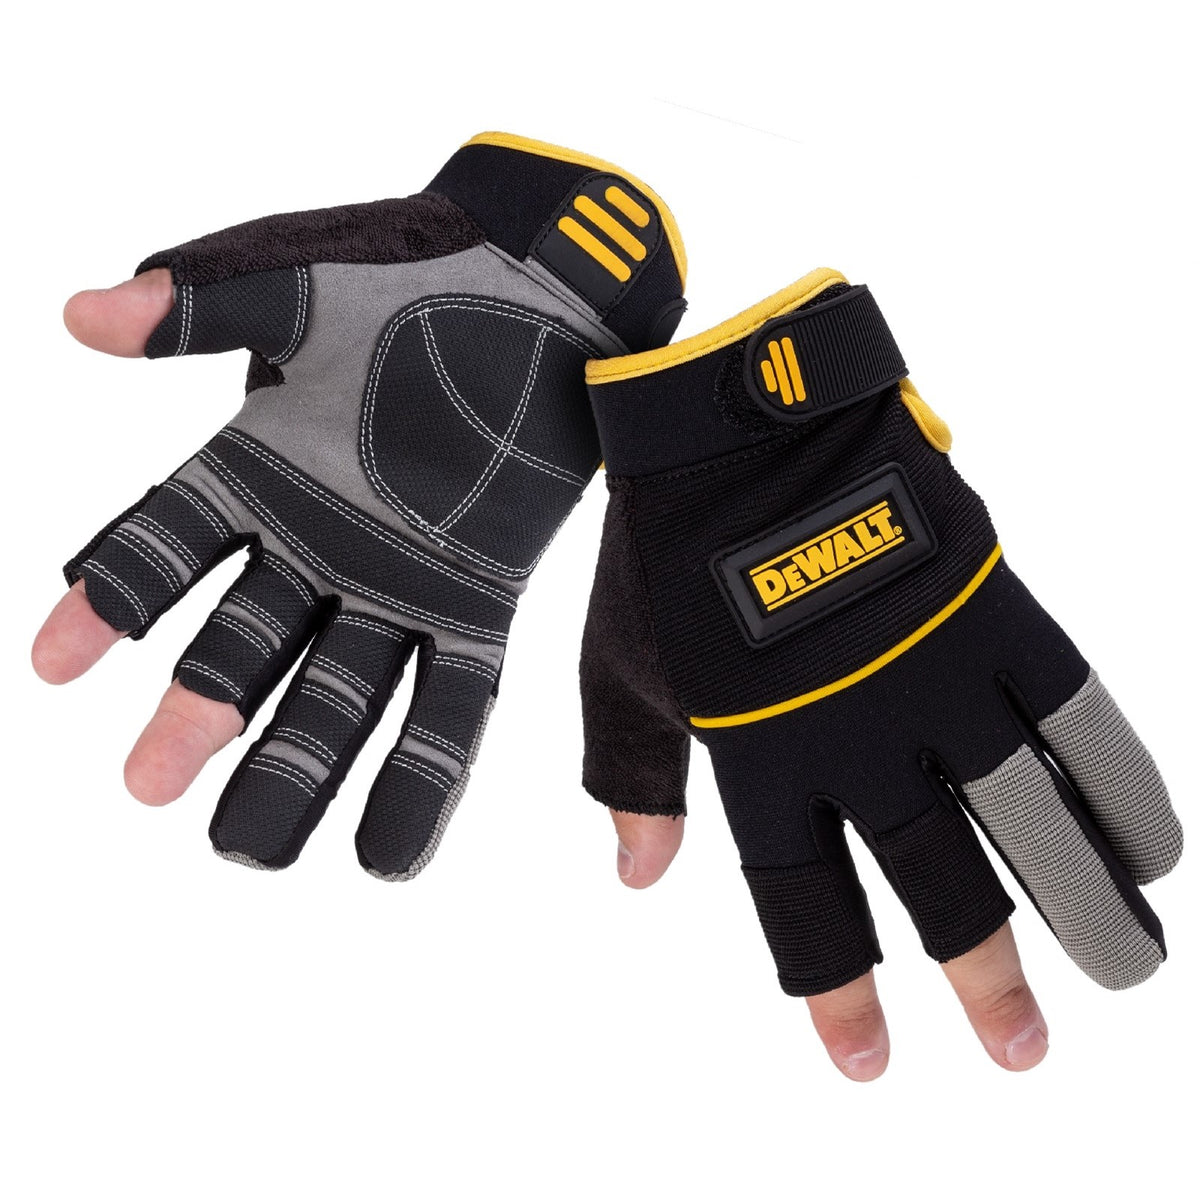 Dewalt Tough Framer Performance Glove - Grey/Black/Yellow - Size Itm (26936-45202-01)